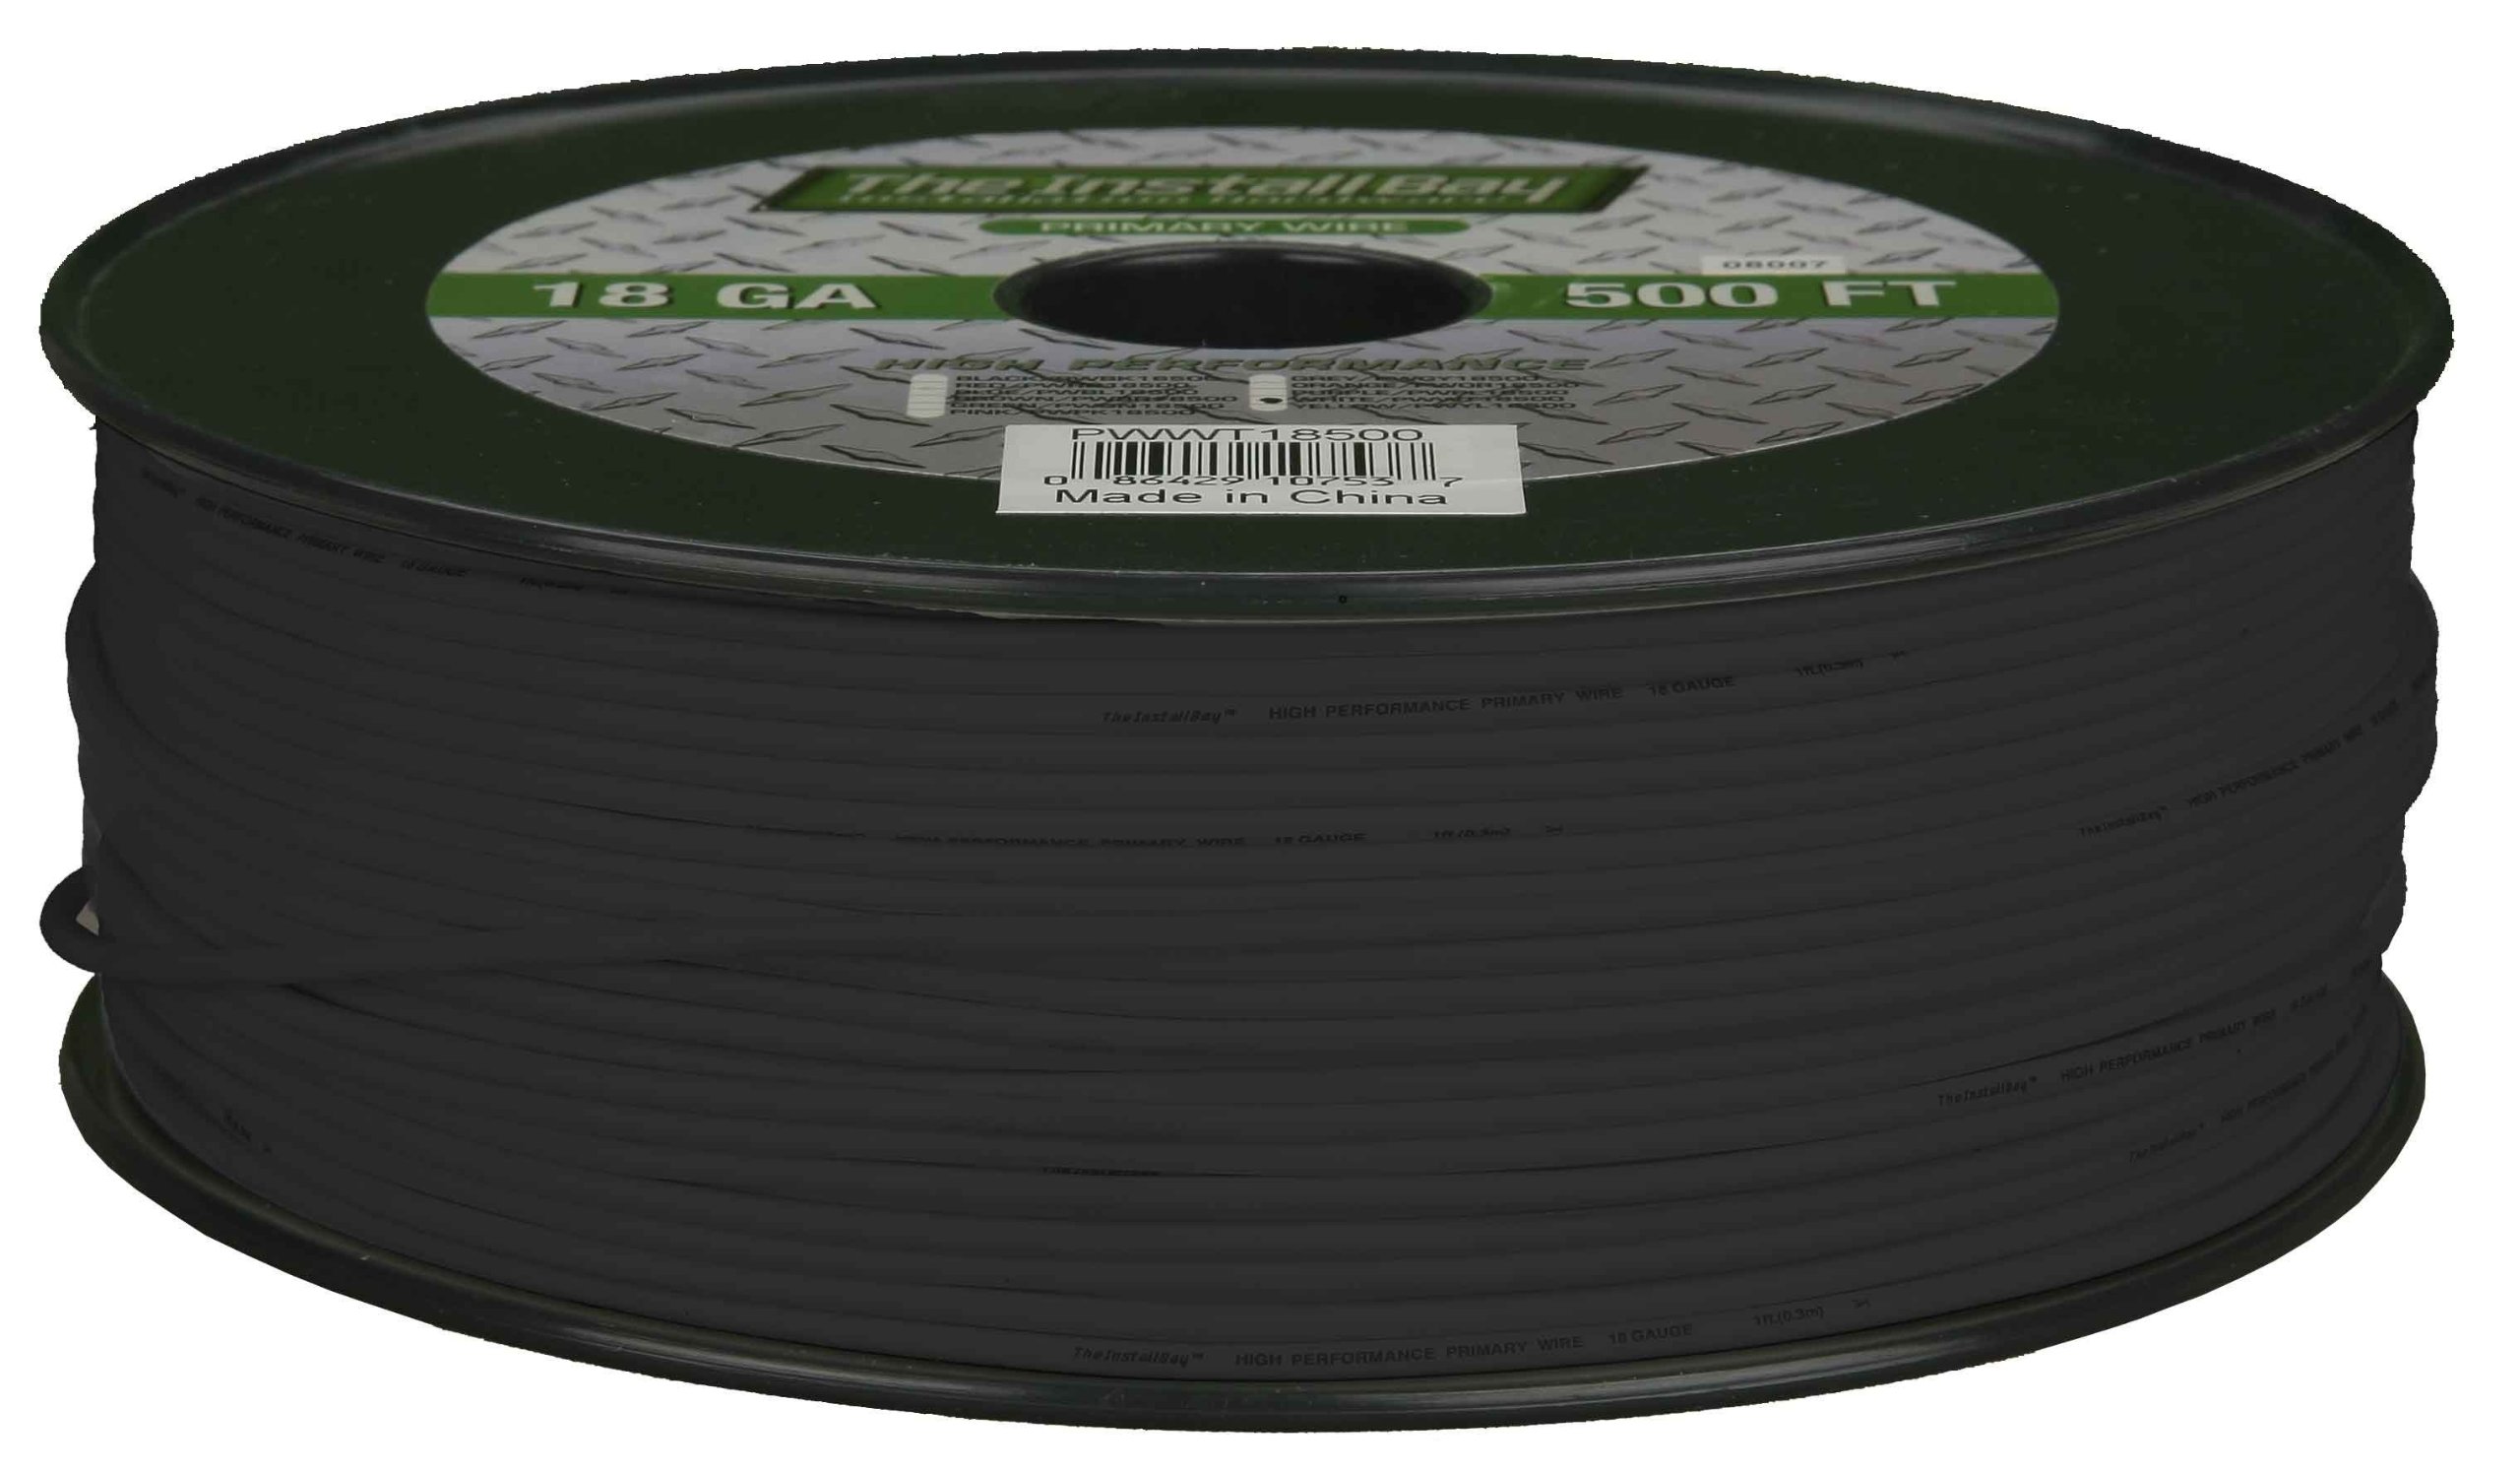 Metra Electronics PWBK18500 18GA 500-Feet Primary Wire, Black